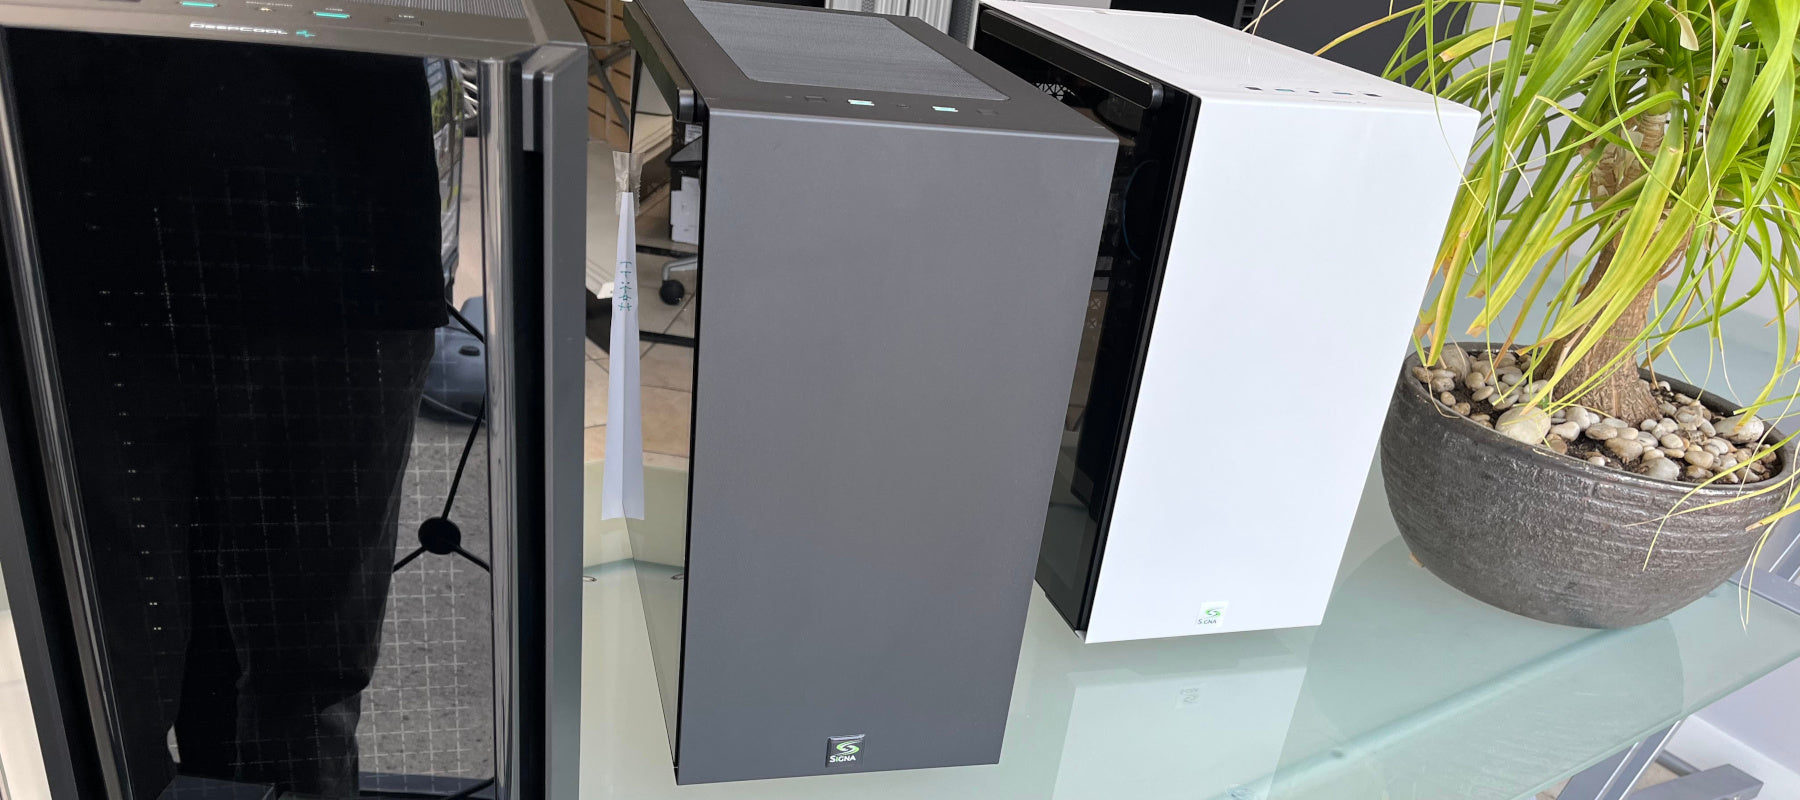 Signa has pre-built PCs available!